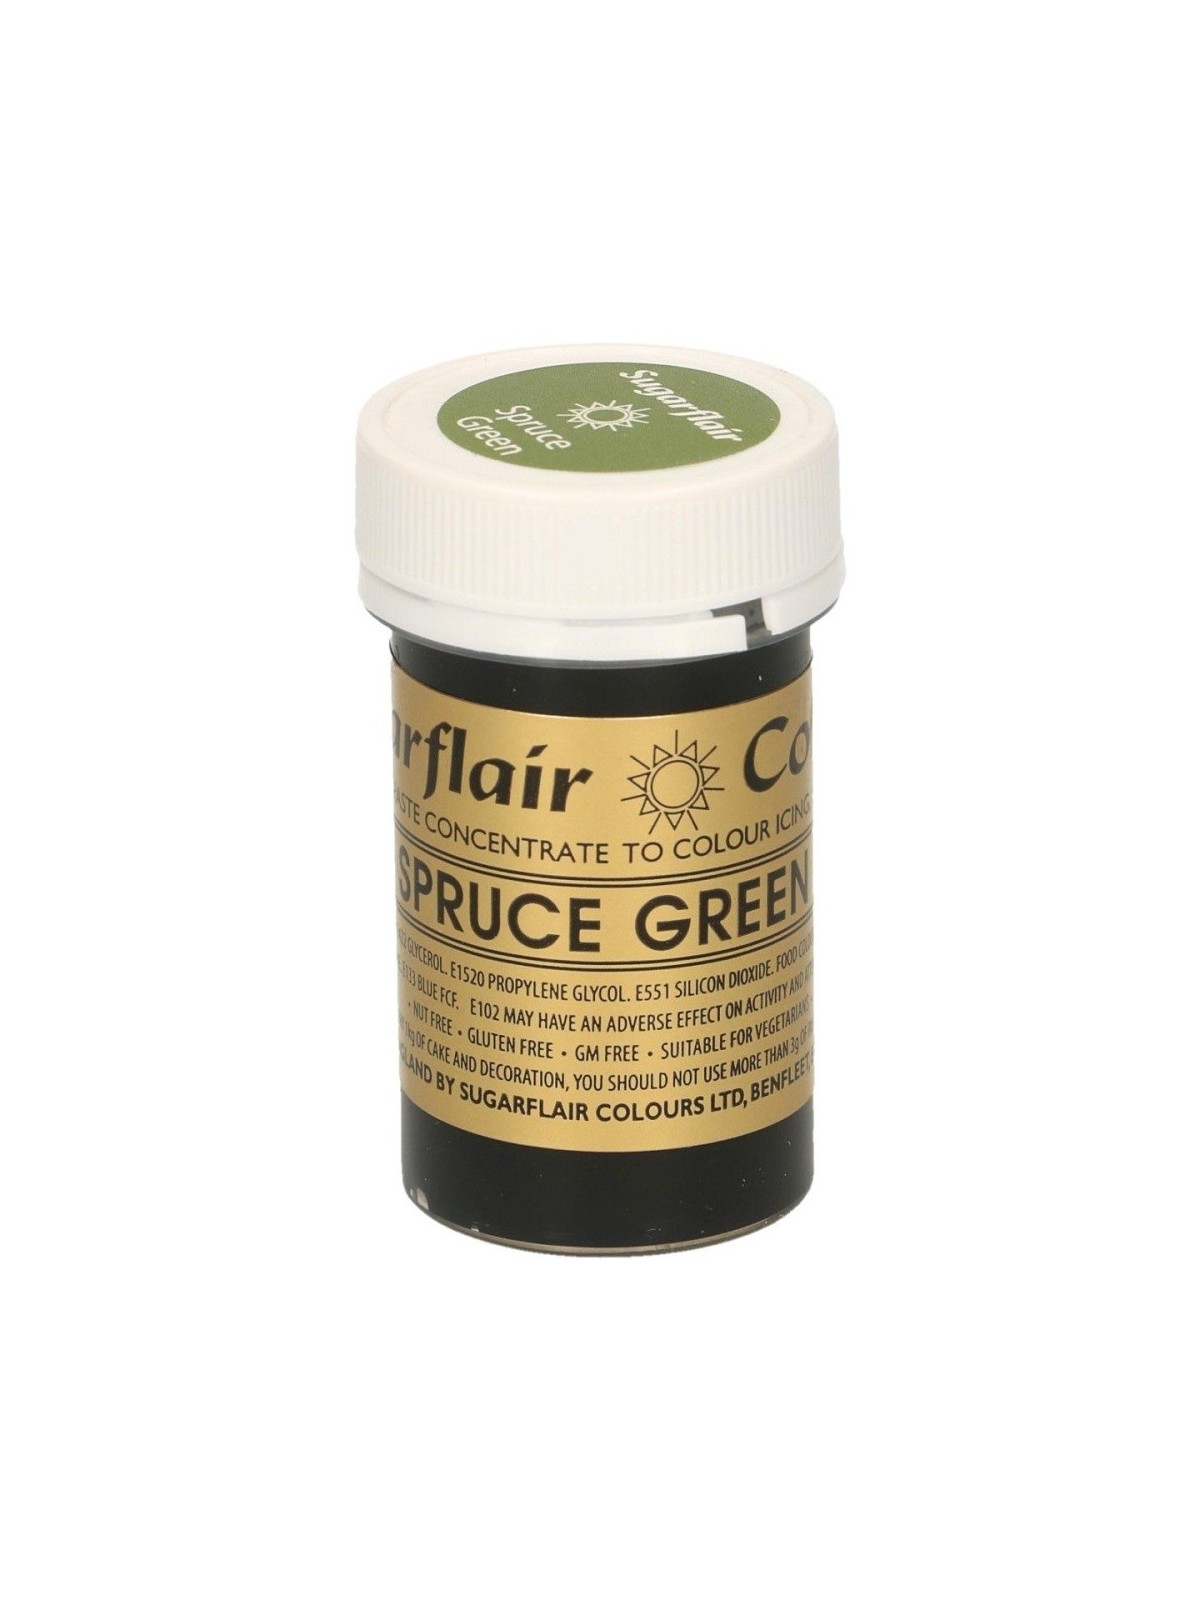 Sugarlair paste colour - Spruce Green - 25g